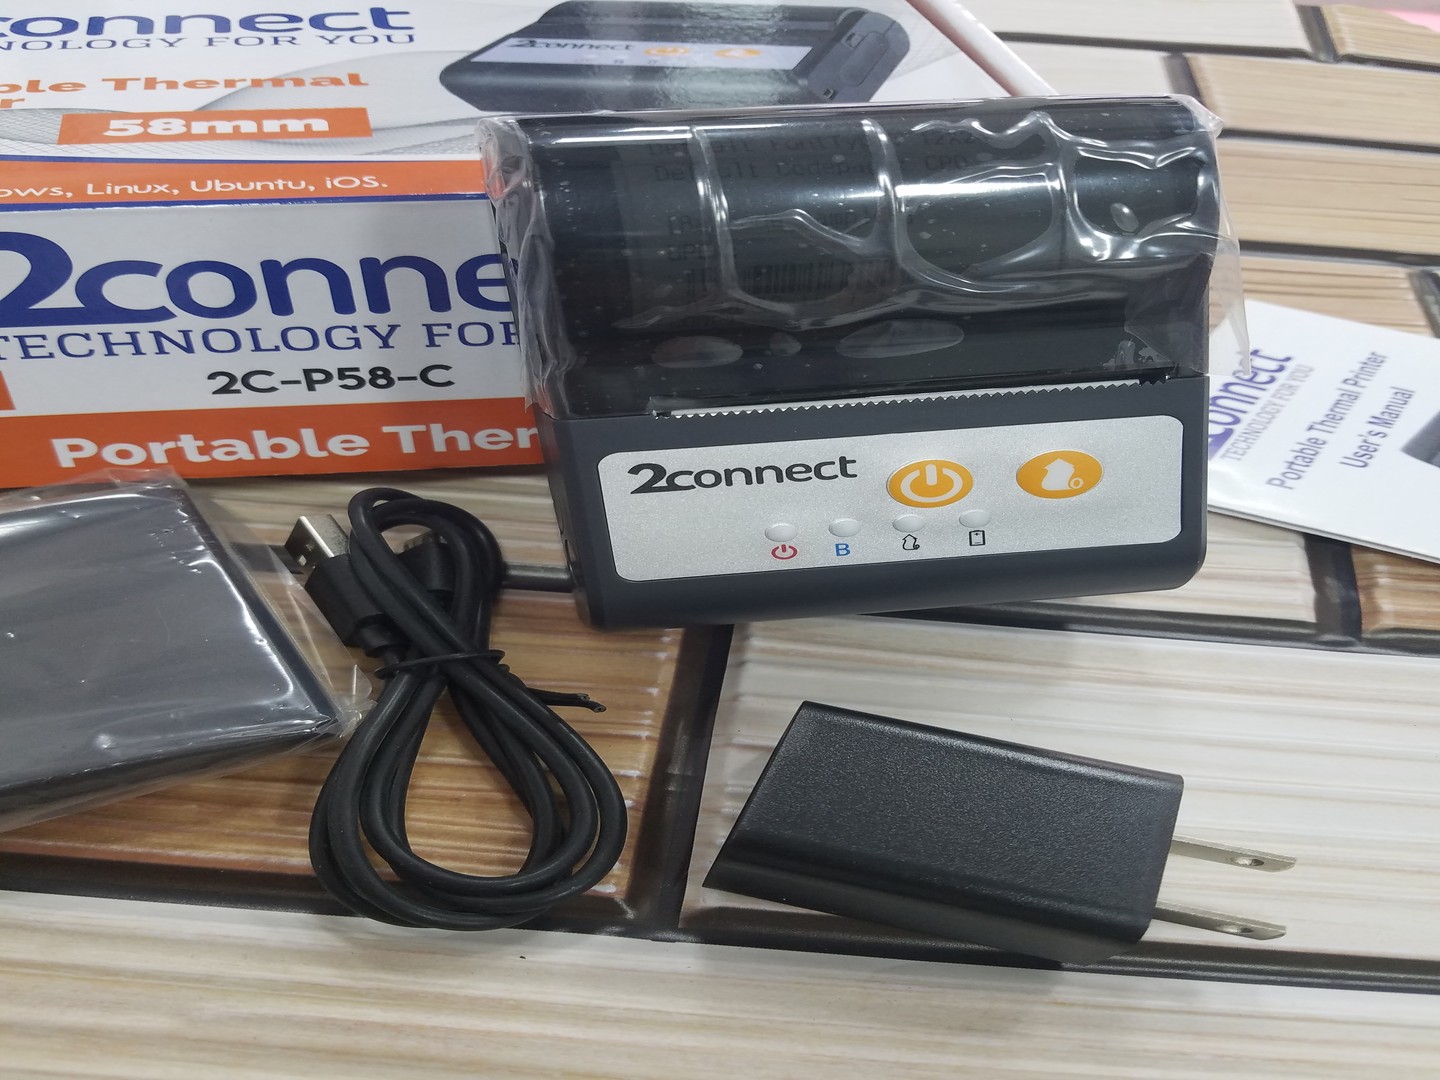 impresoras y scanners - Impresora termica bluetooth y USB de 58mm 2 connect  1